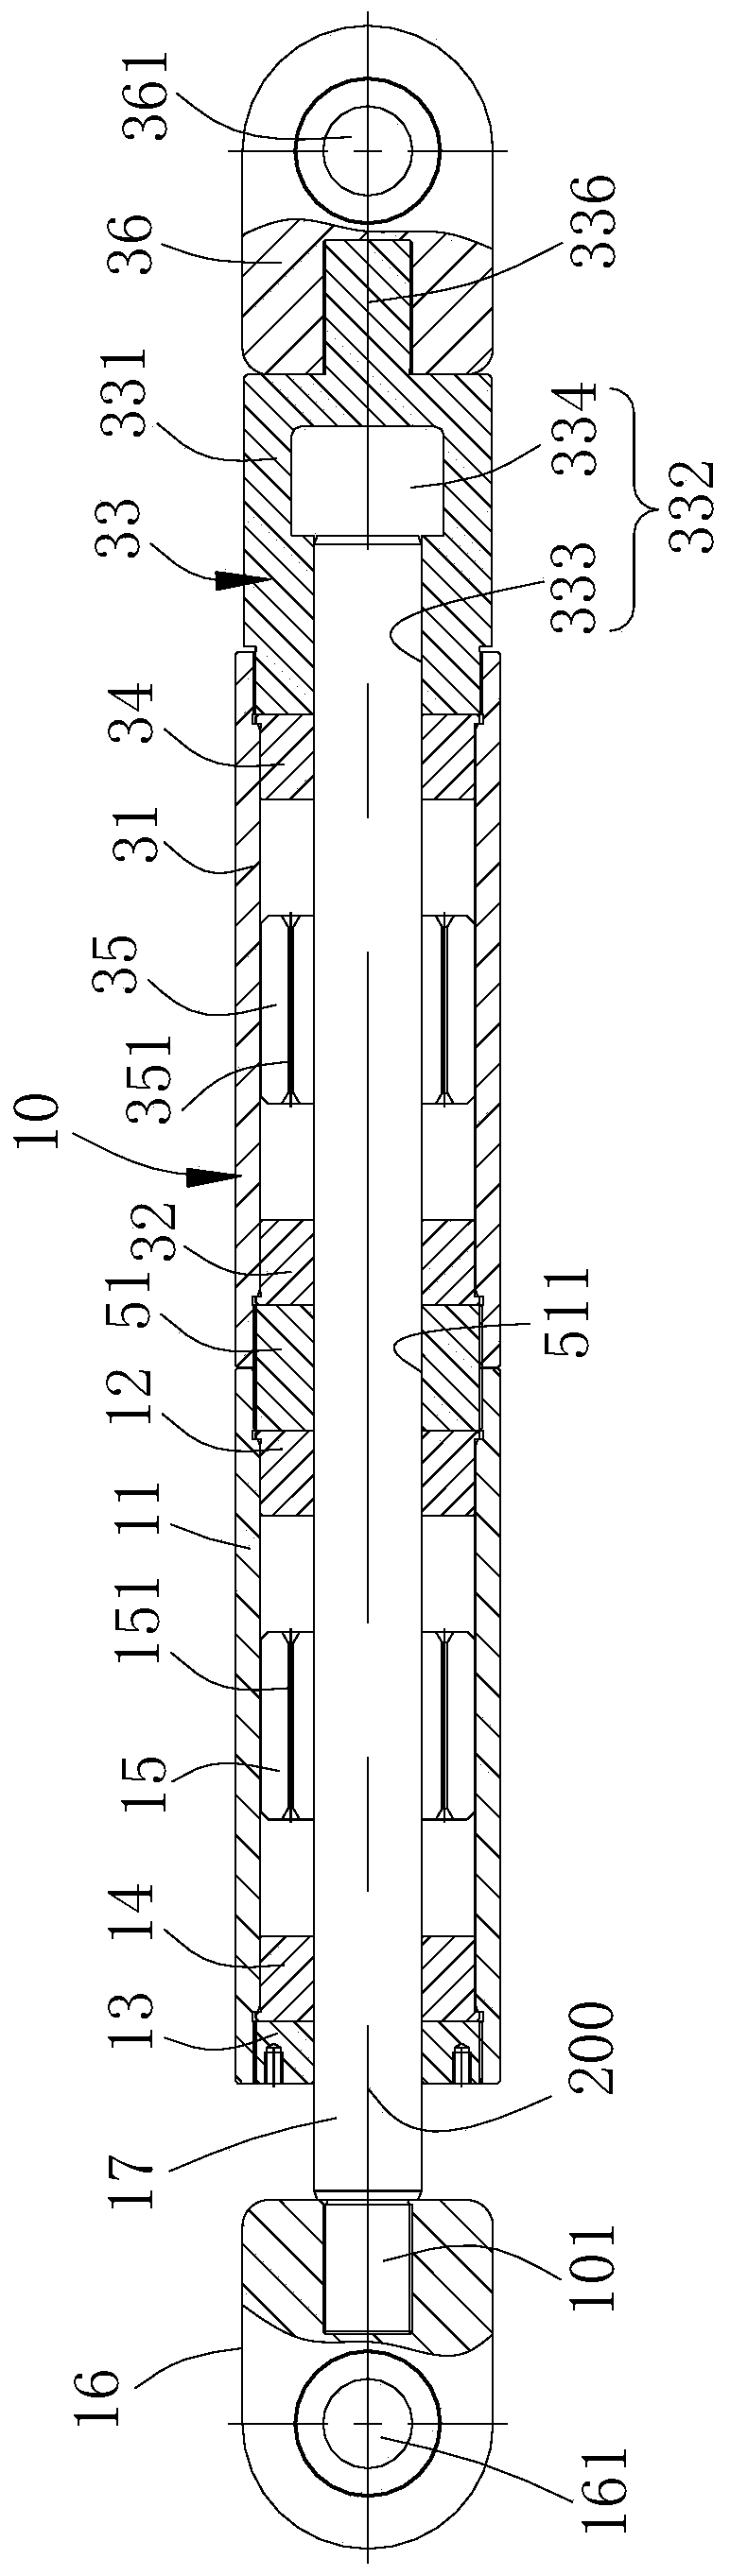 Multi-cylinder combination type viscous damper